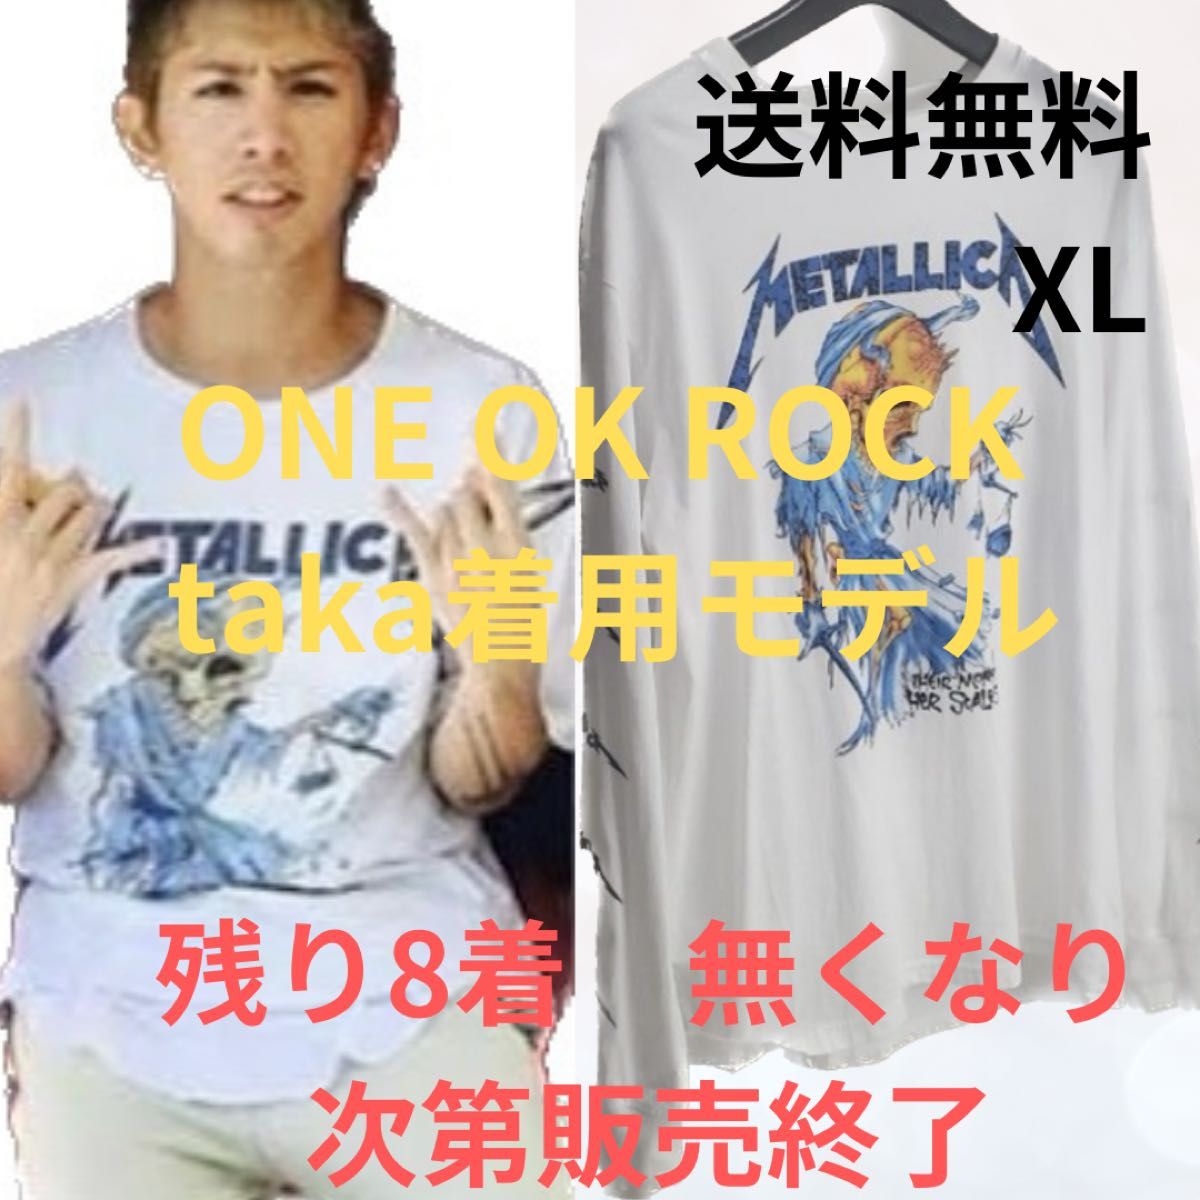 ONE OK ROCK taka着用 長袖Tシャツ メタリカTシャツ metalica｜PayPay